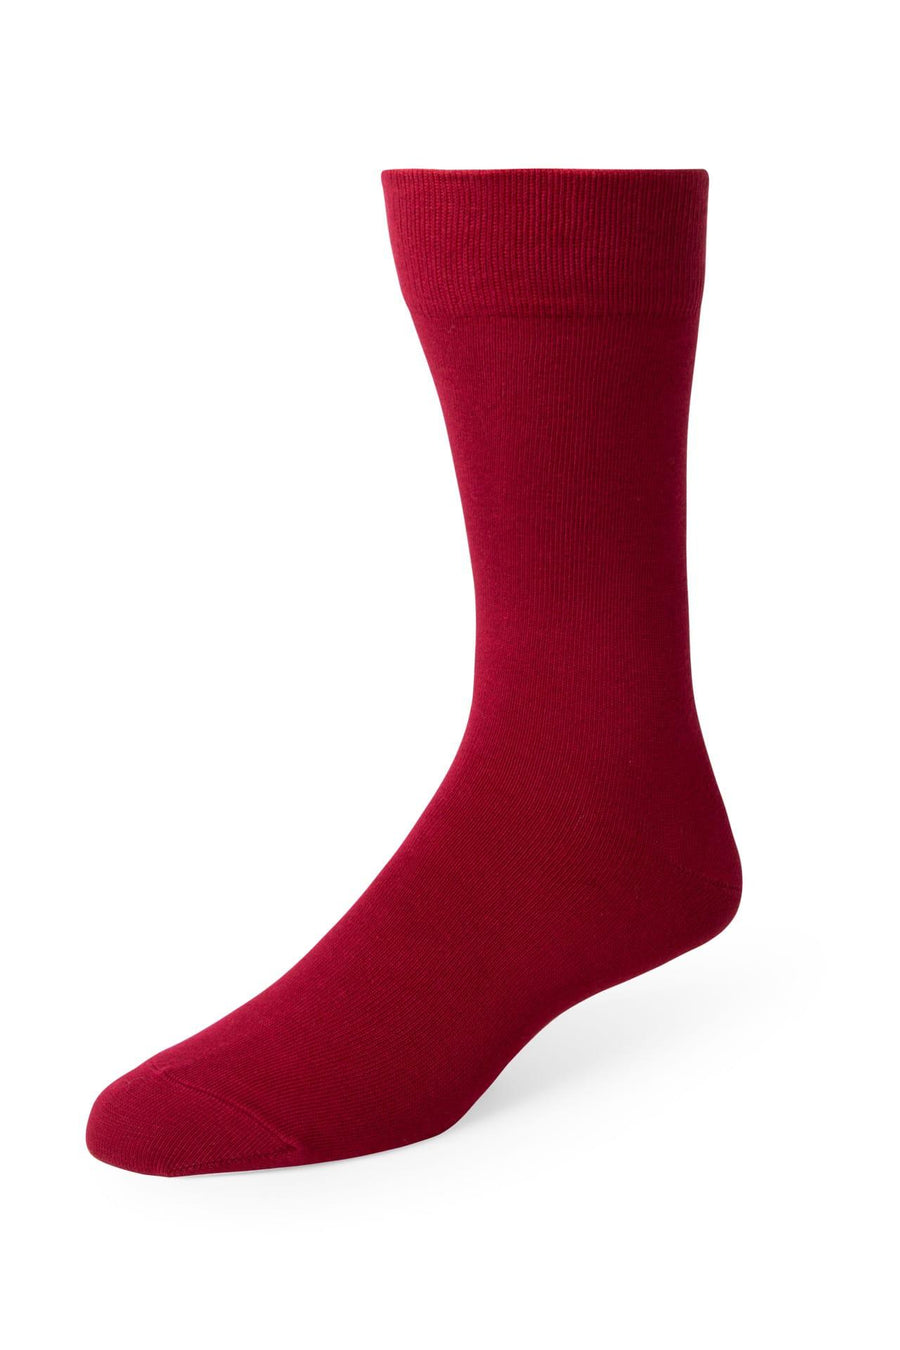 Apple Red Dress Socks